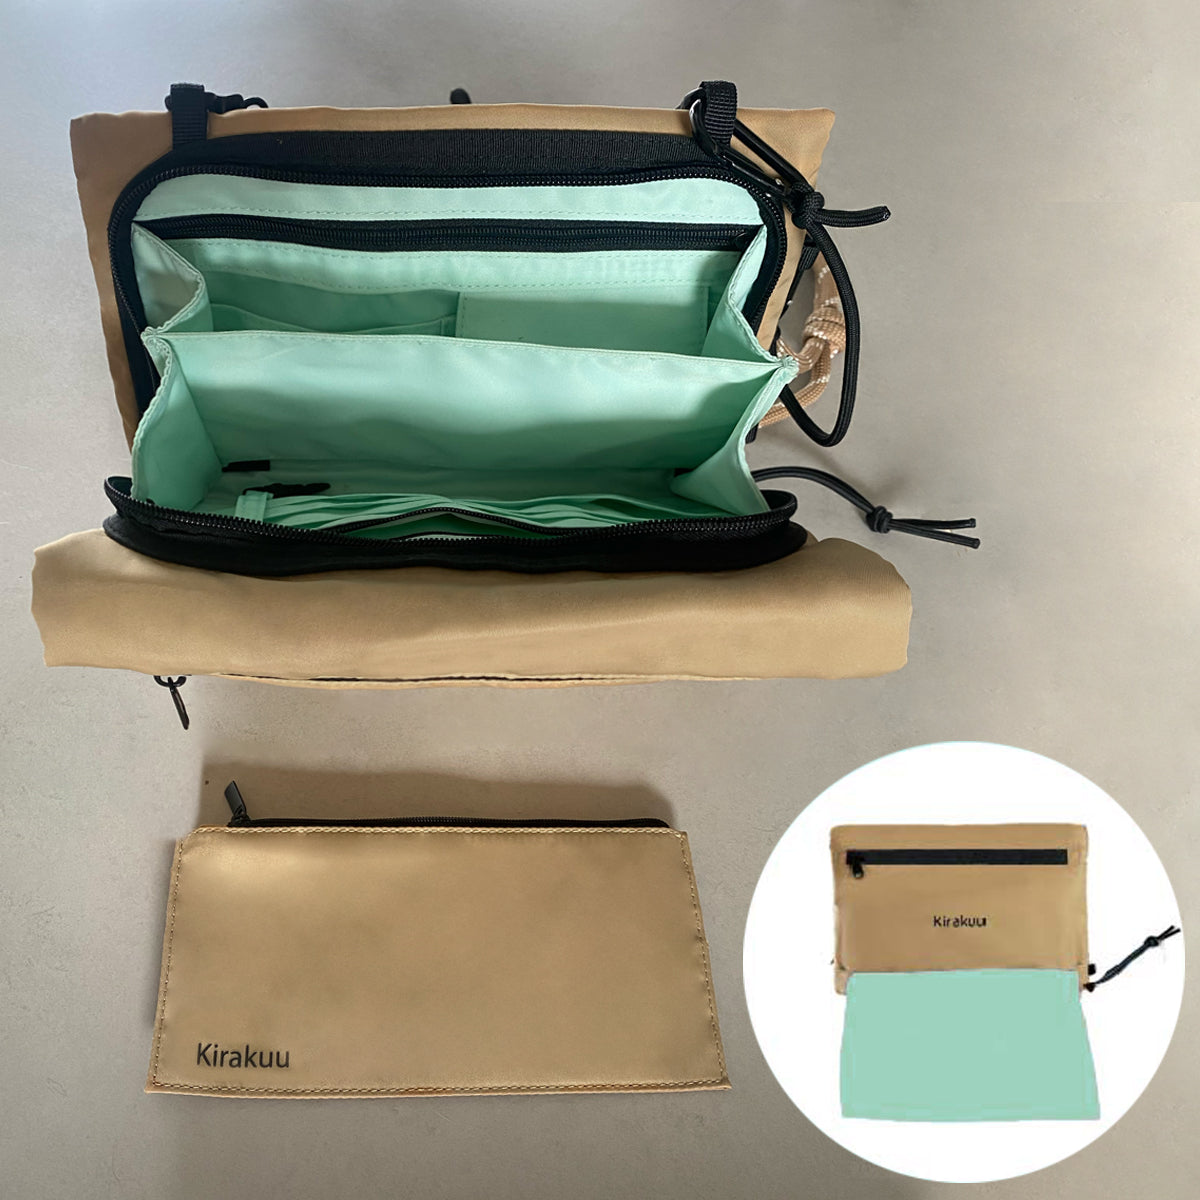 Kirakuu Travel Bag (Buy a Travel Bag to Get Free Juice Bangle)